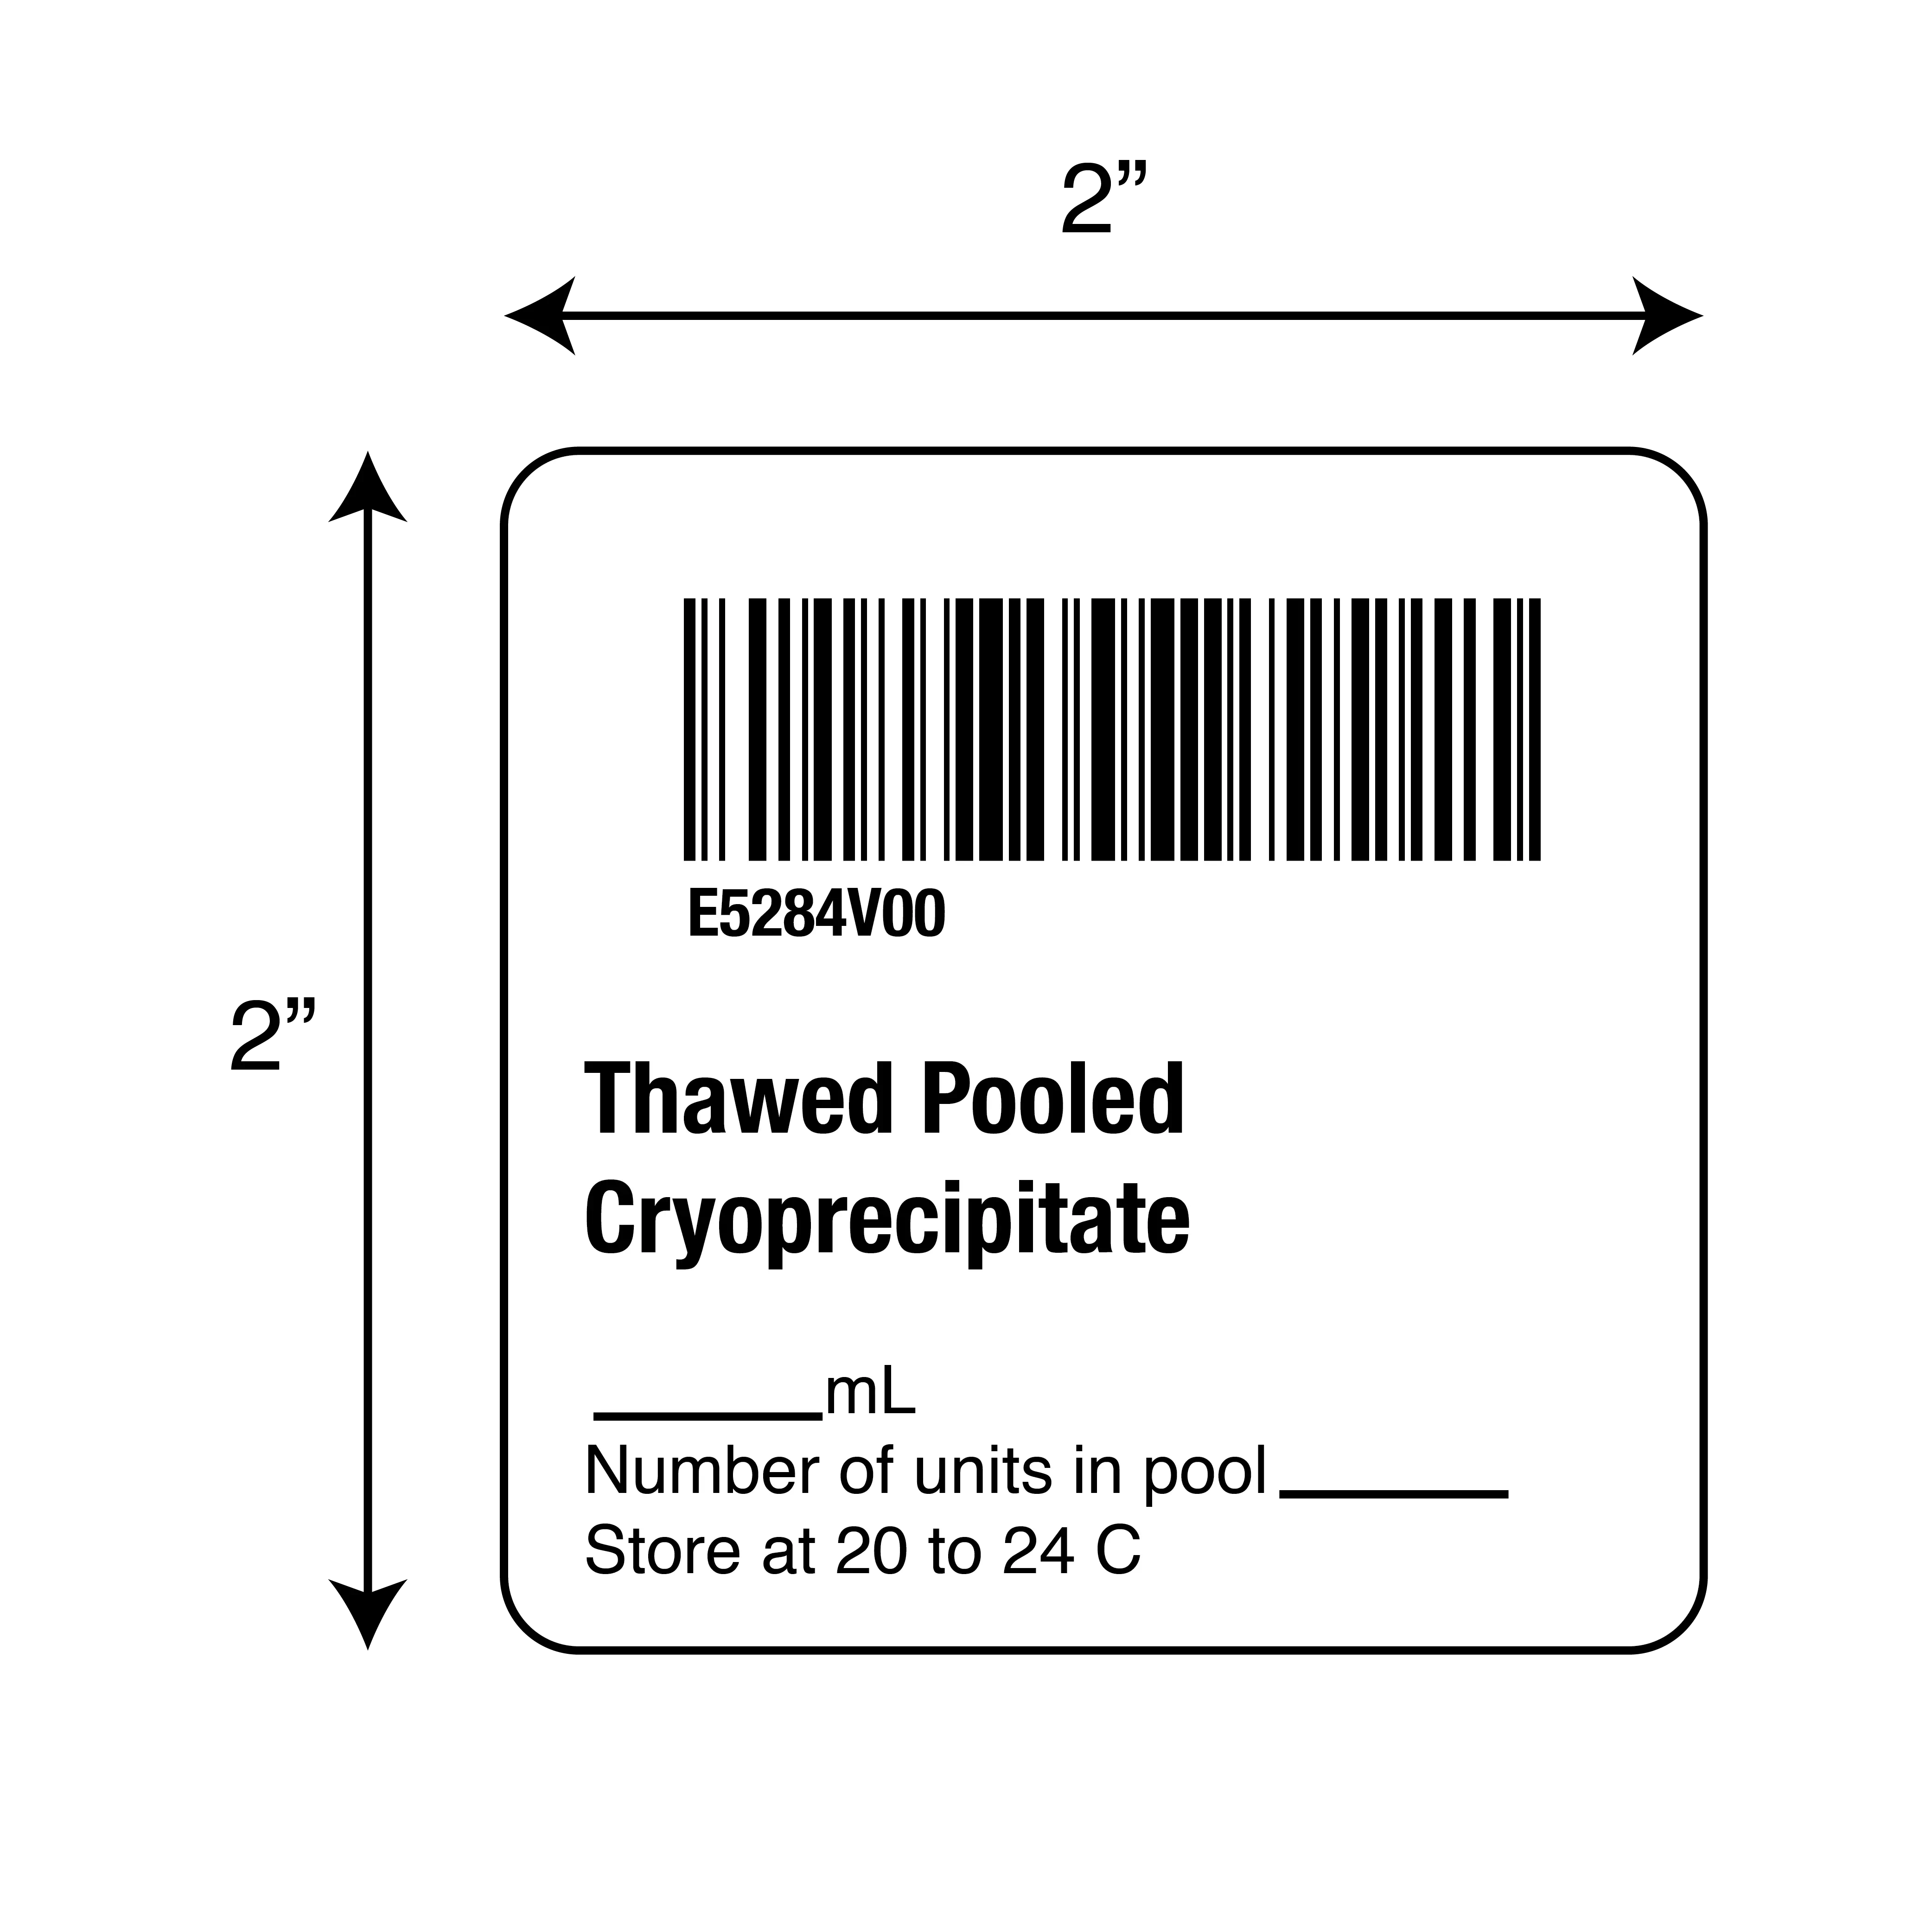 ISBT 128 Thawed Pooled Cryoprecipitate